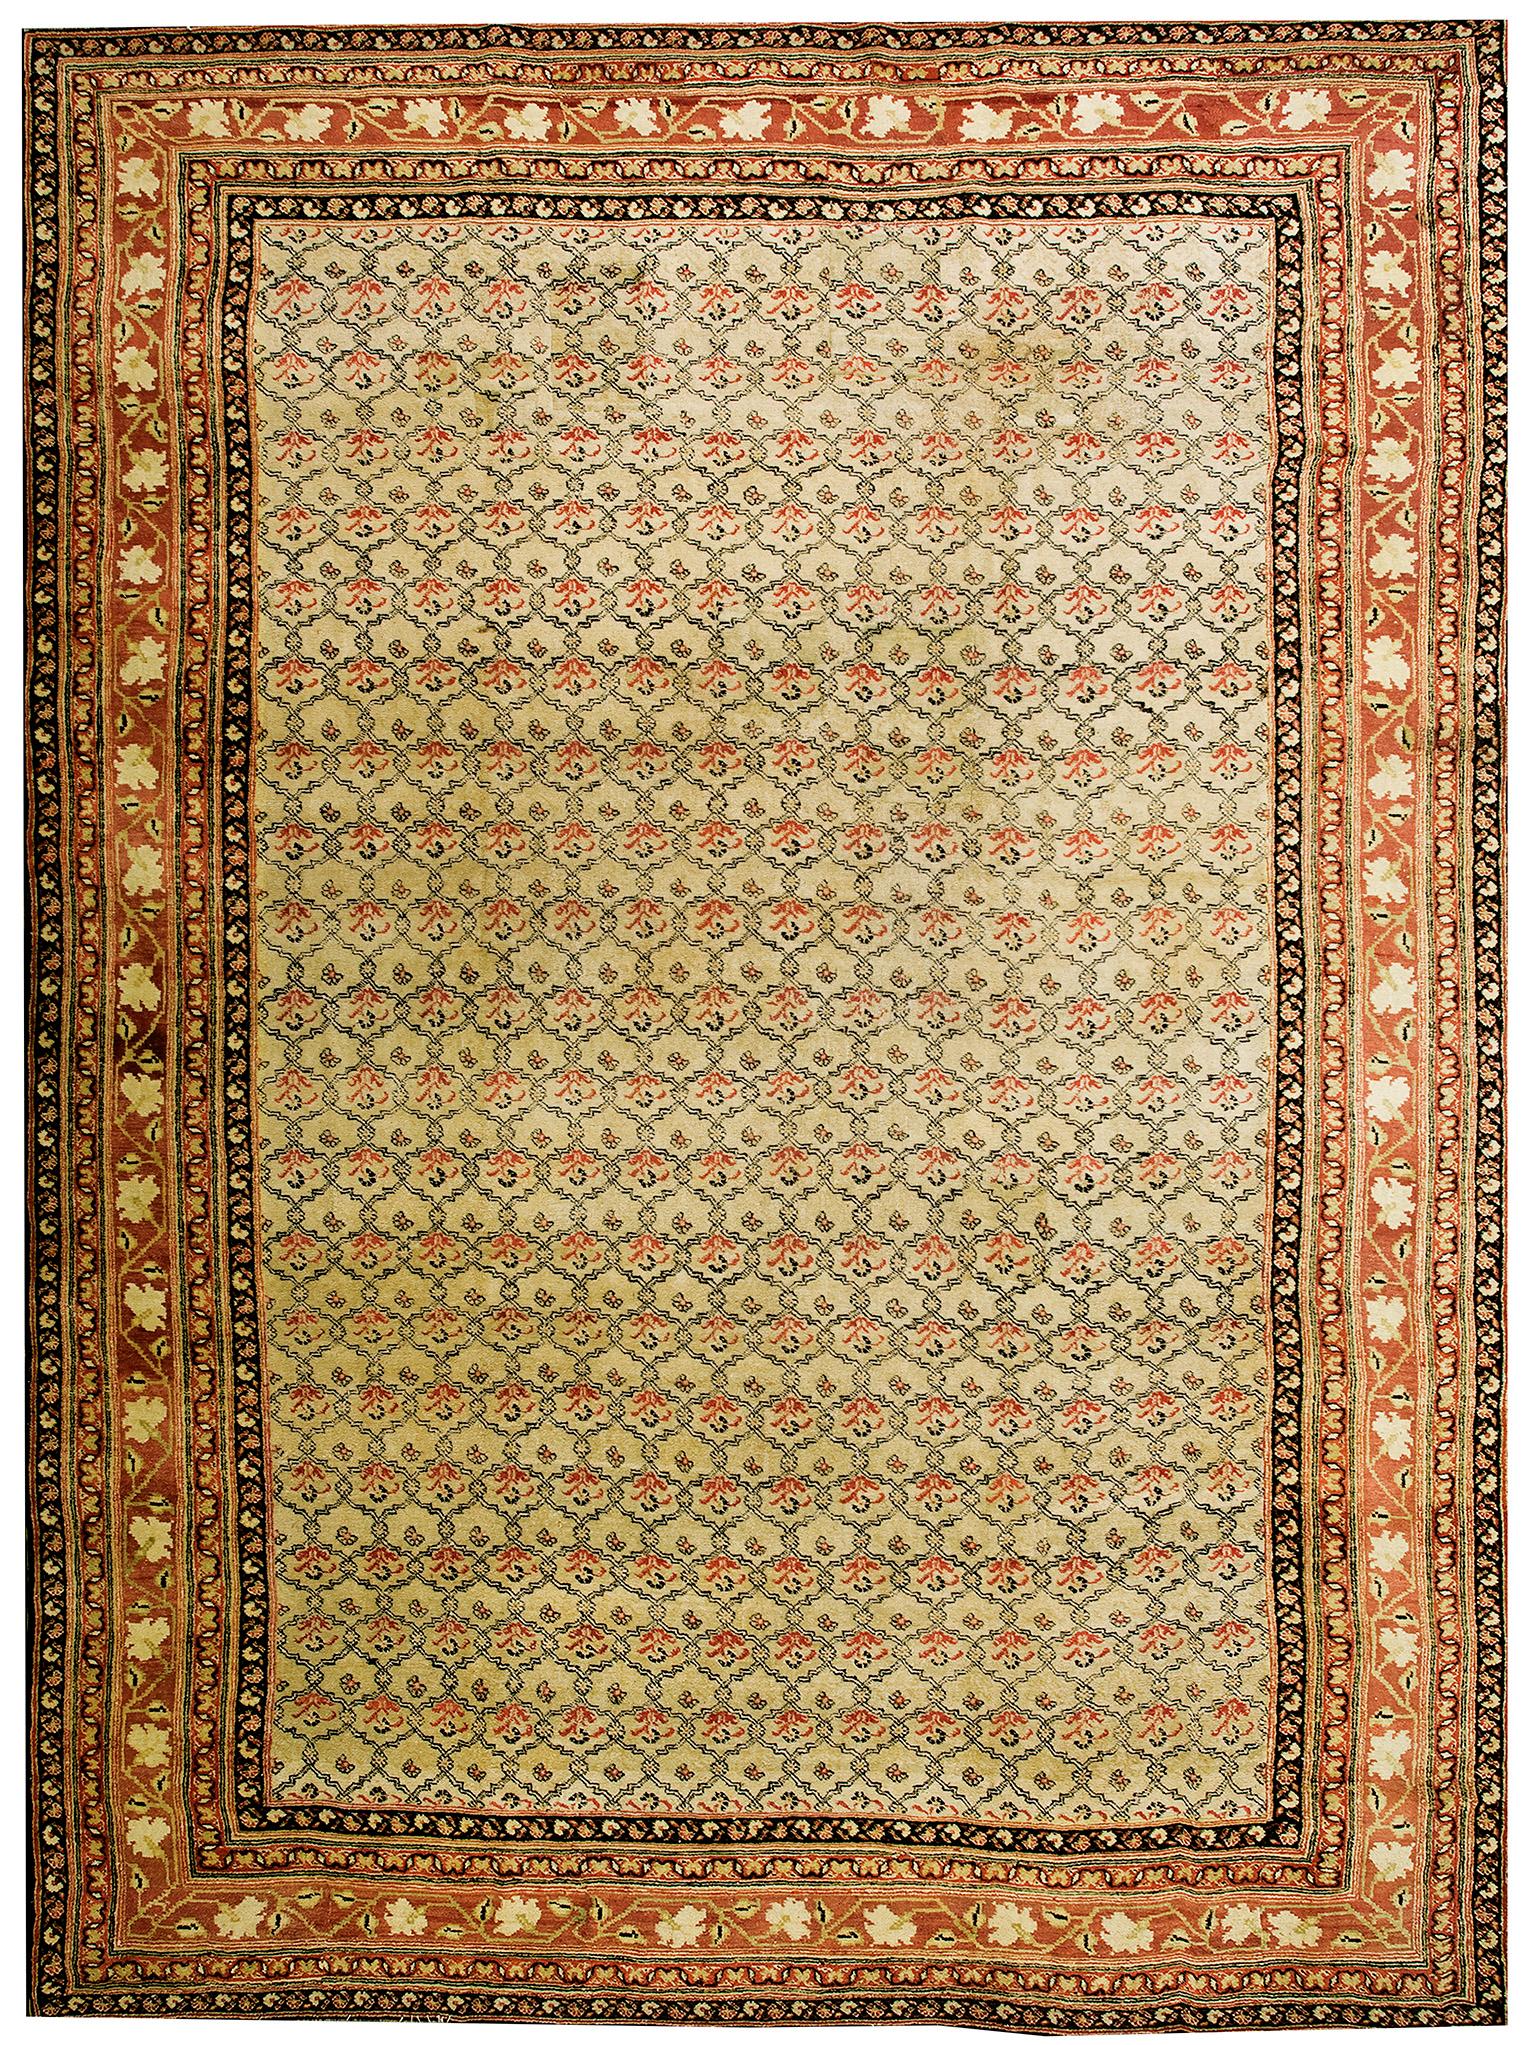 19th Century N. Indian Agra Carpet ( 10'8" x14'8" - 325 x 447 )